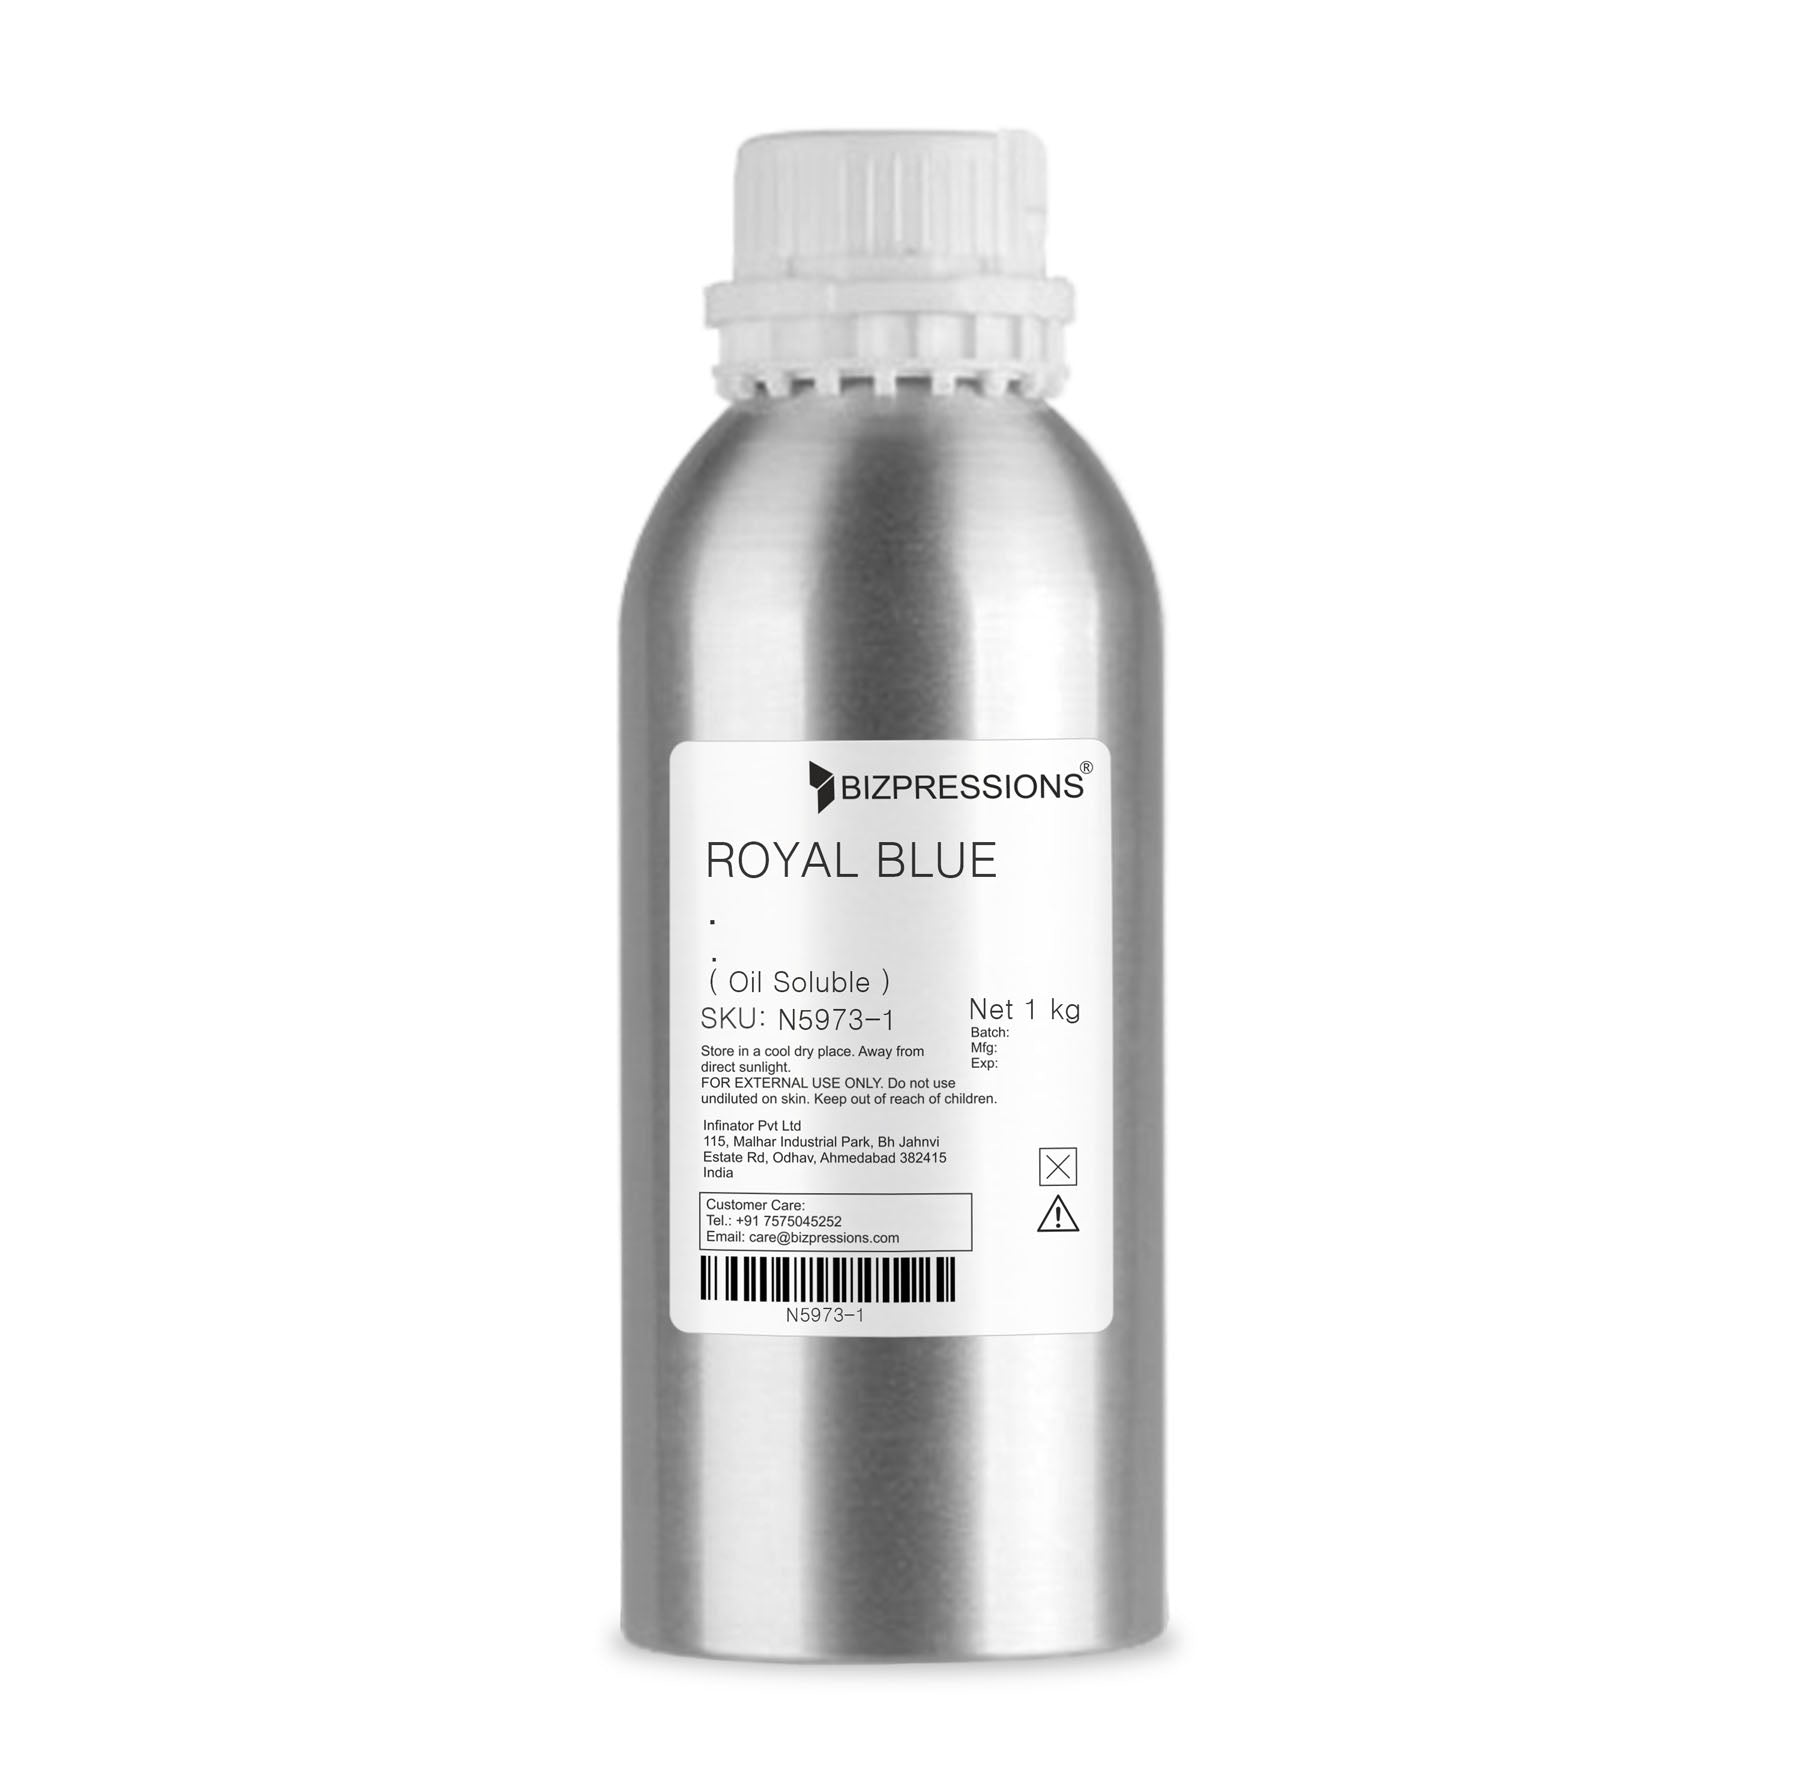 ROYAL BLUE - Fragrance ( Oil Soluble ) - 1 kg